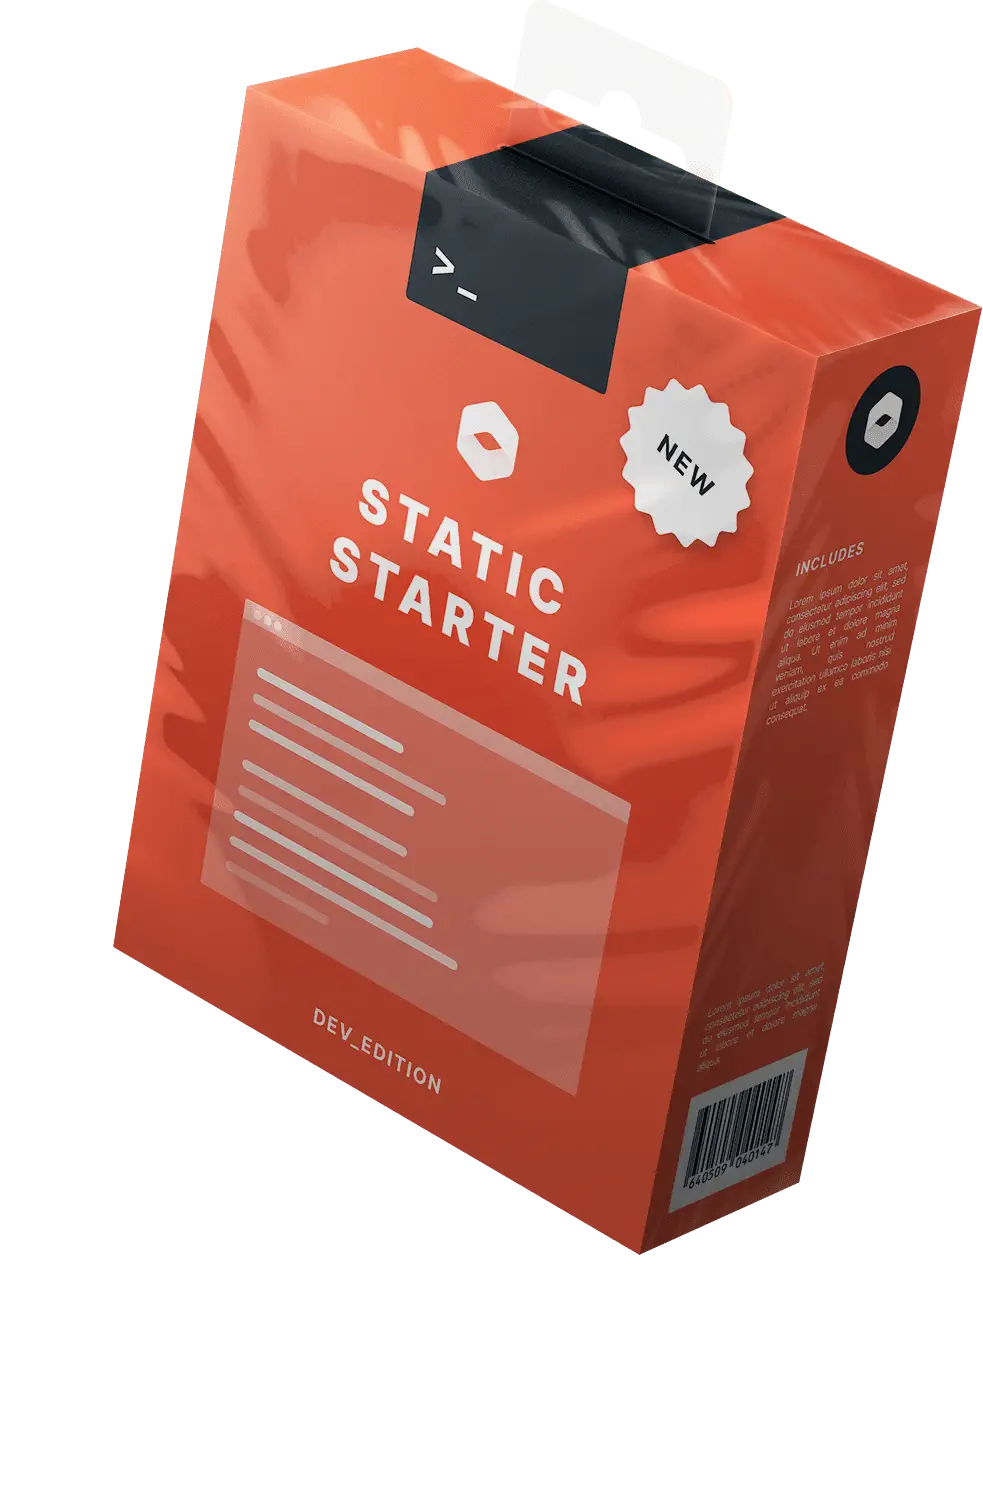 static starter
    product box